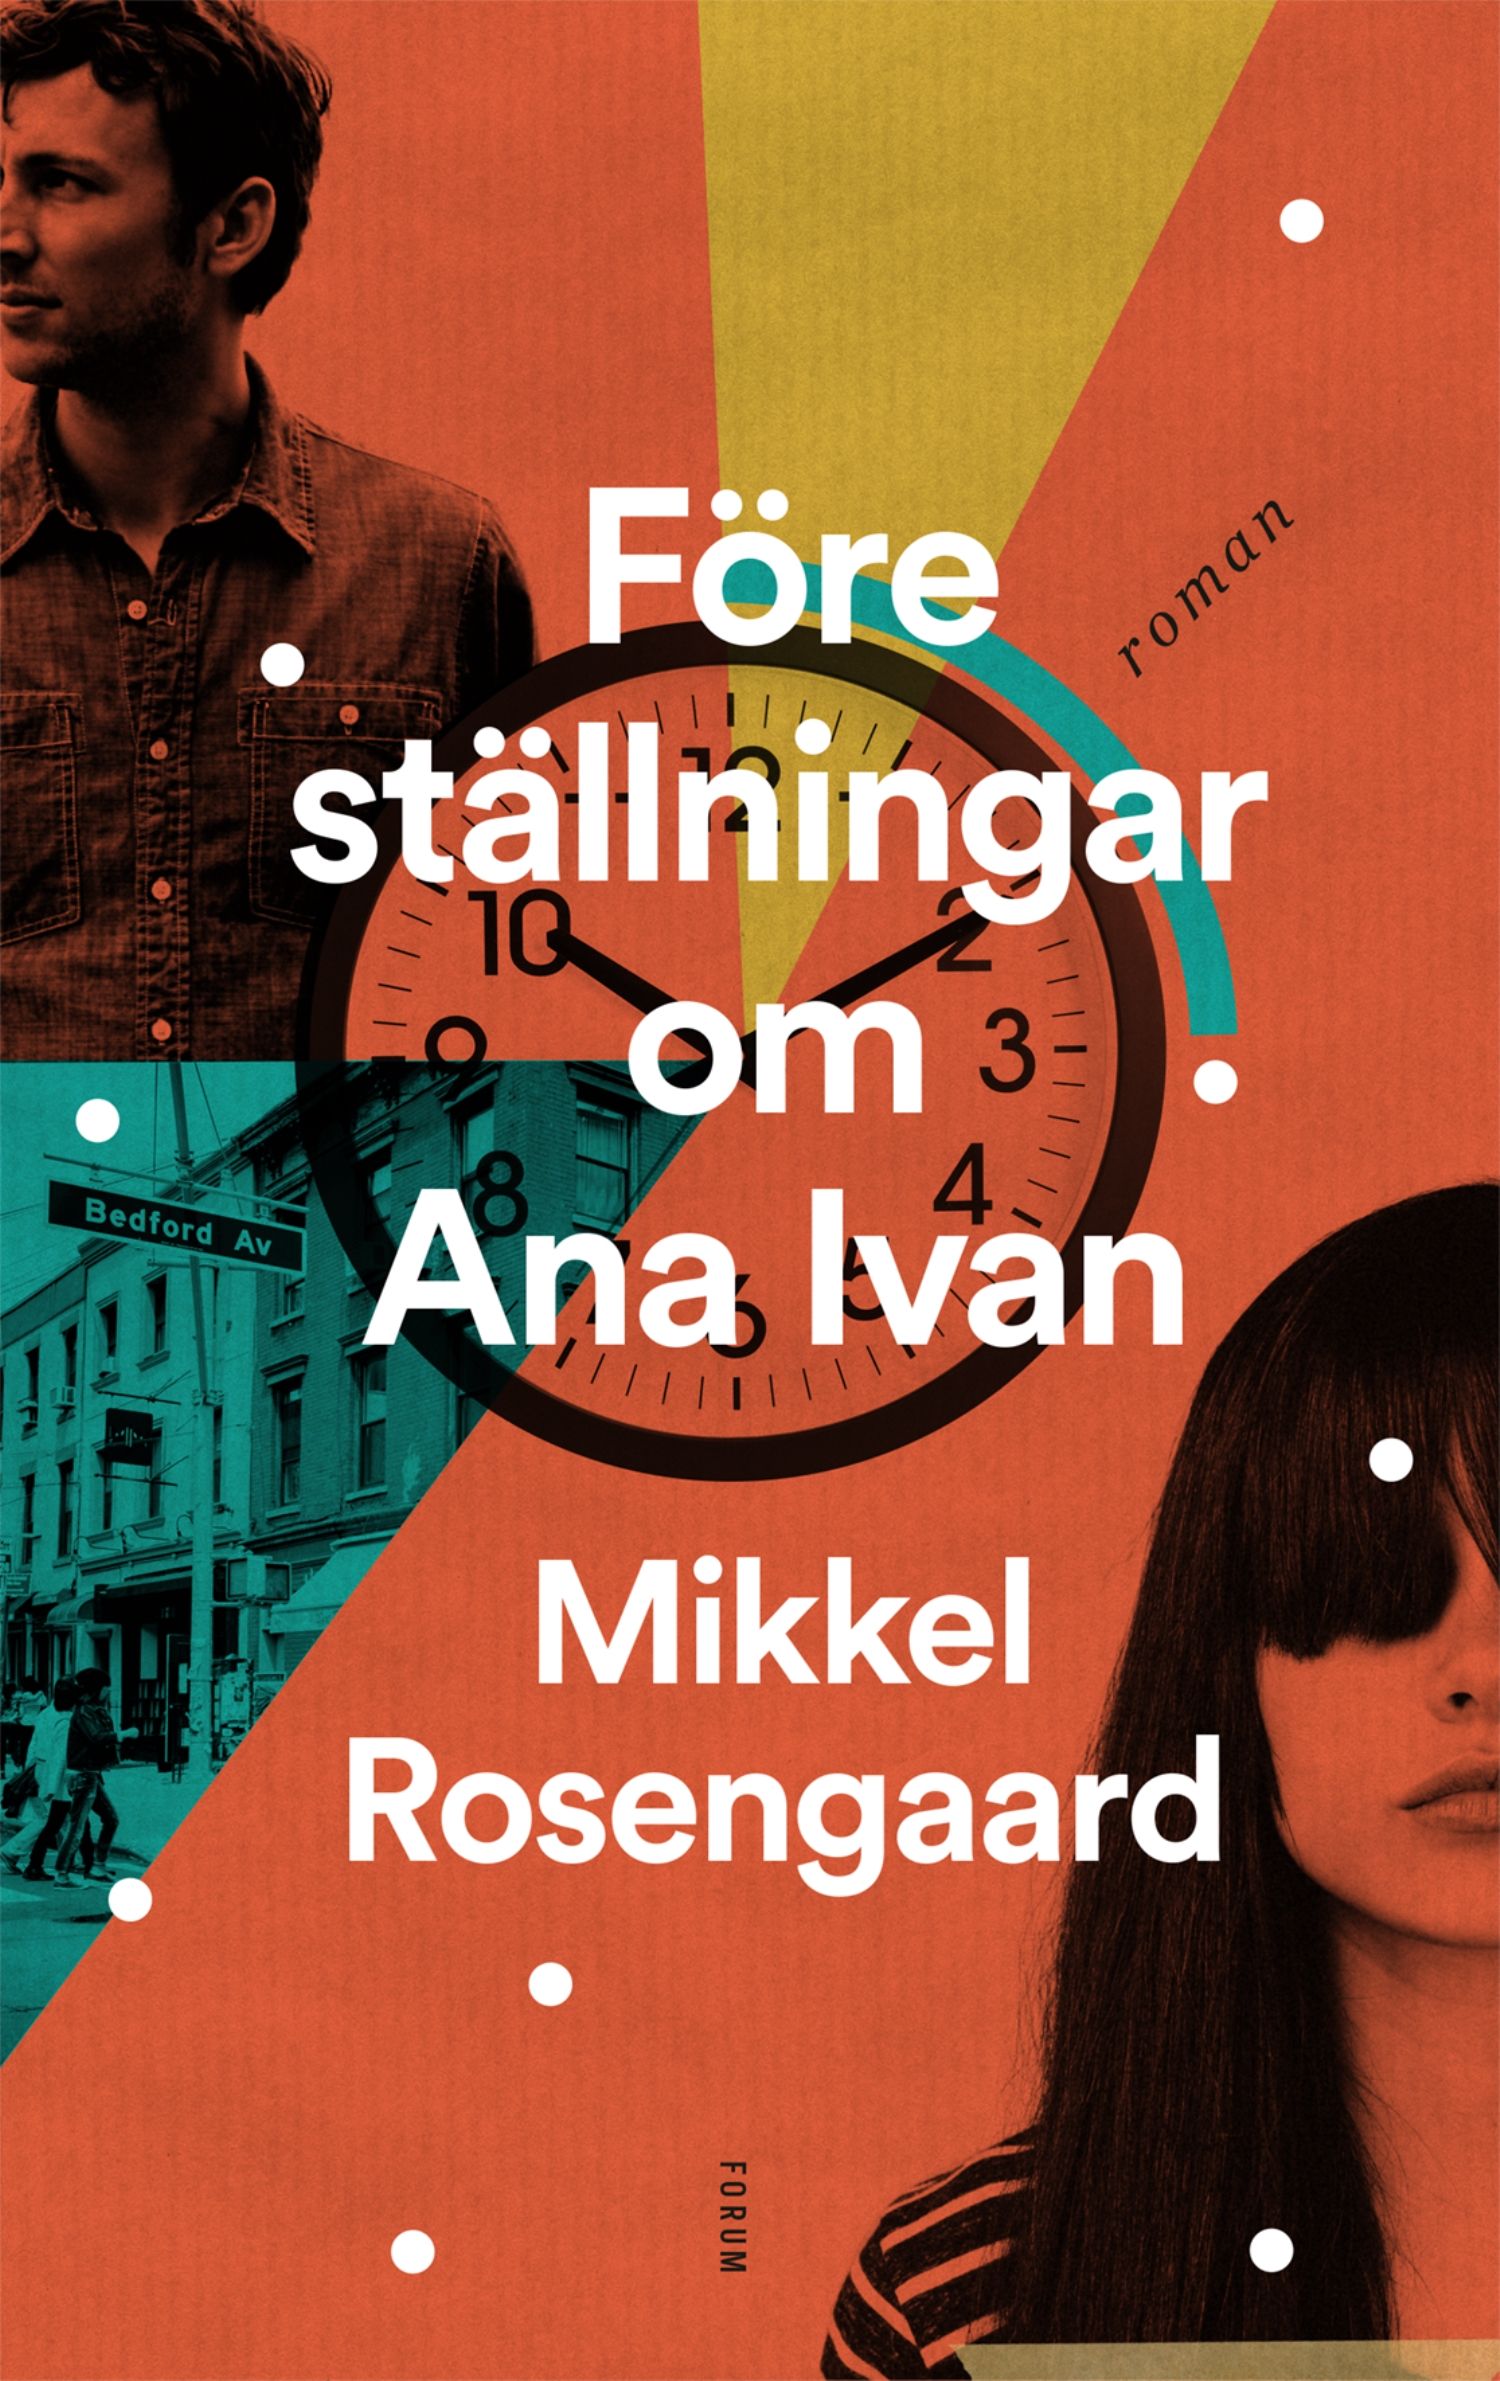 Föreställningar om Ana Ivan, e-bog af Mikkel Rosengaard